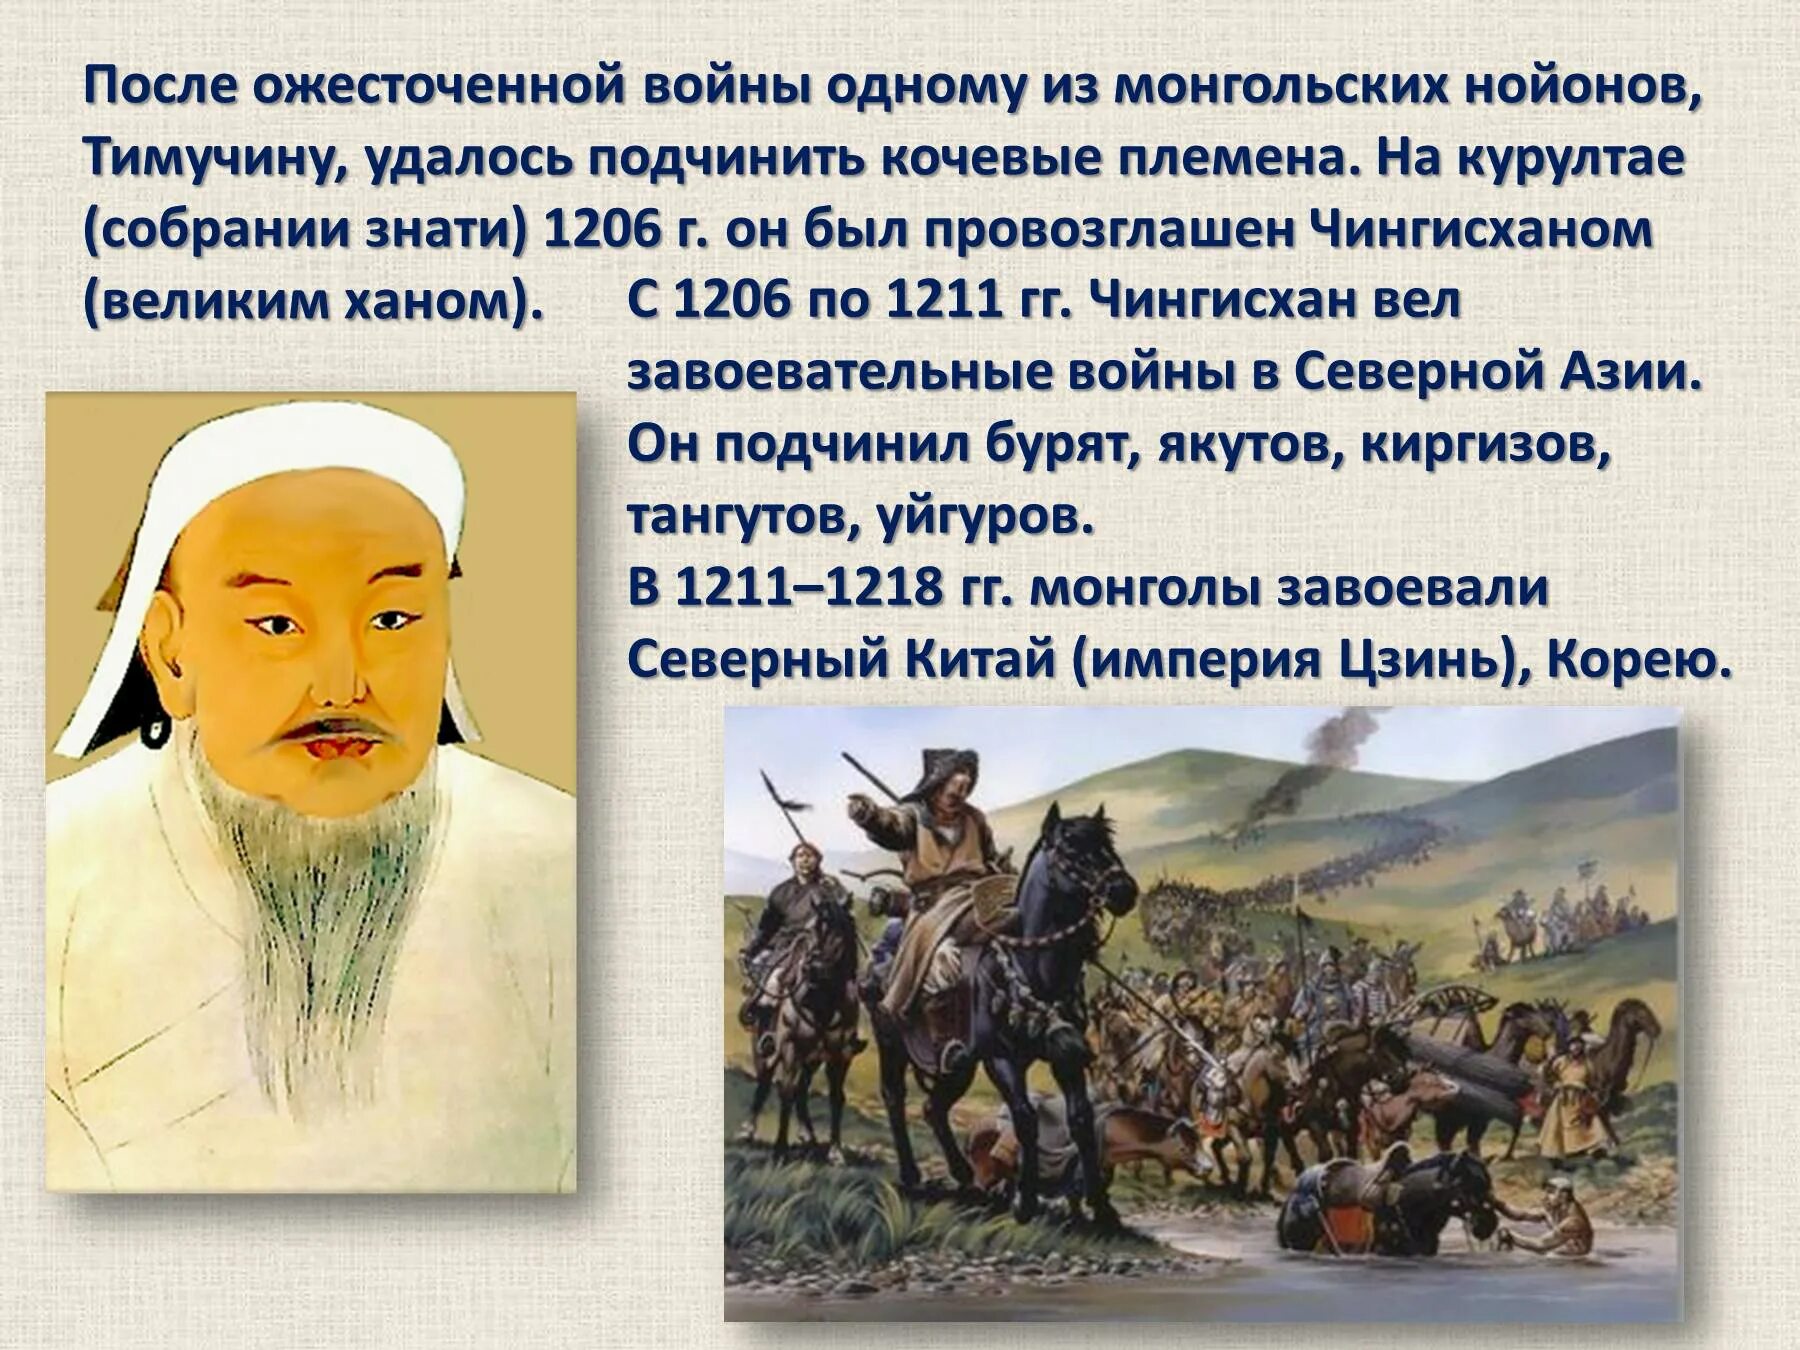 Налог монгольскому хану. Монголия Чингис Хан. Образование империи Чингисхана 6 класс. Темучин-нойон.